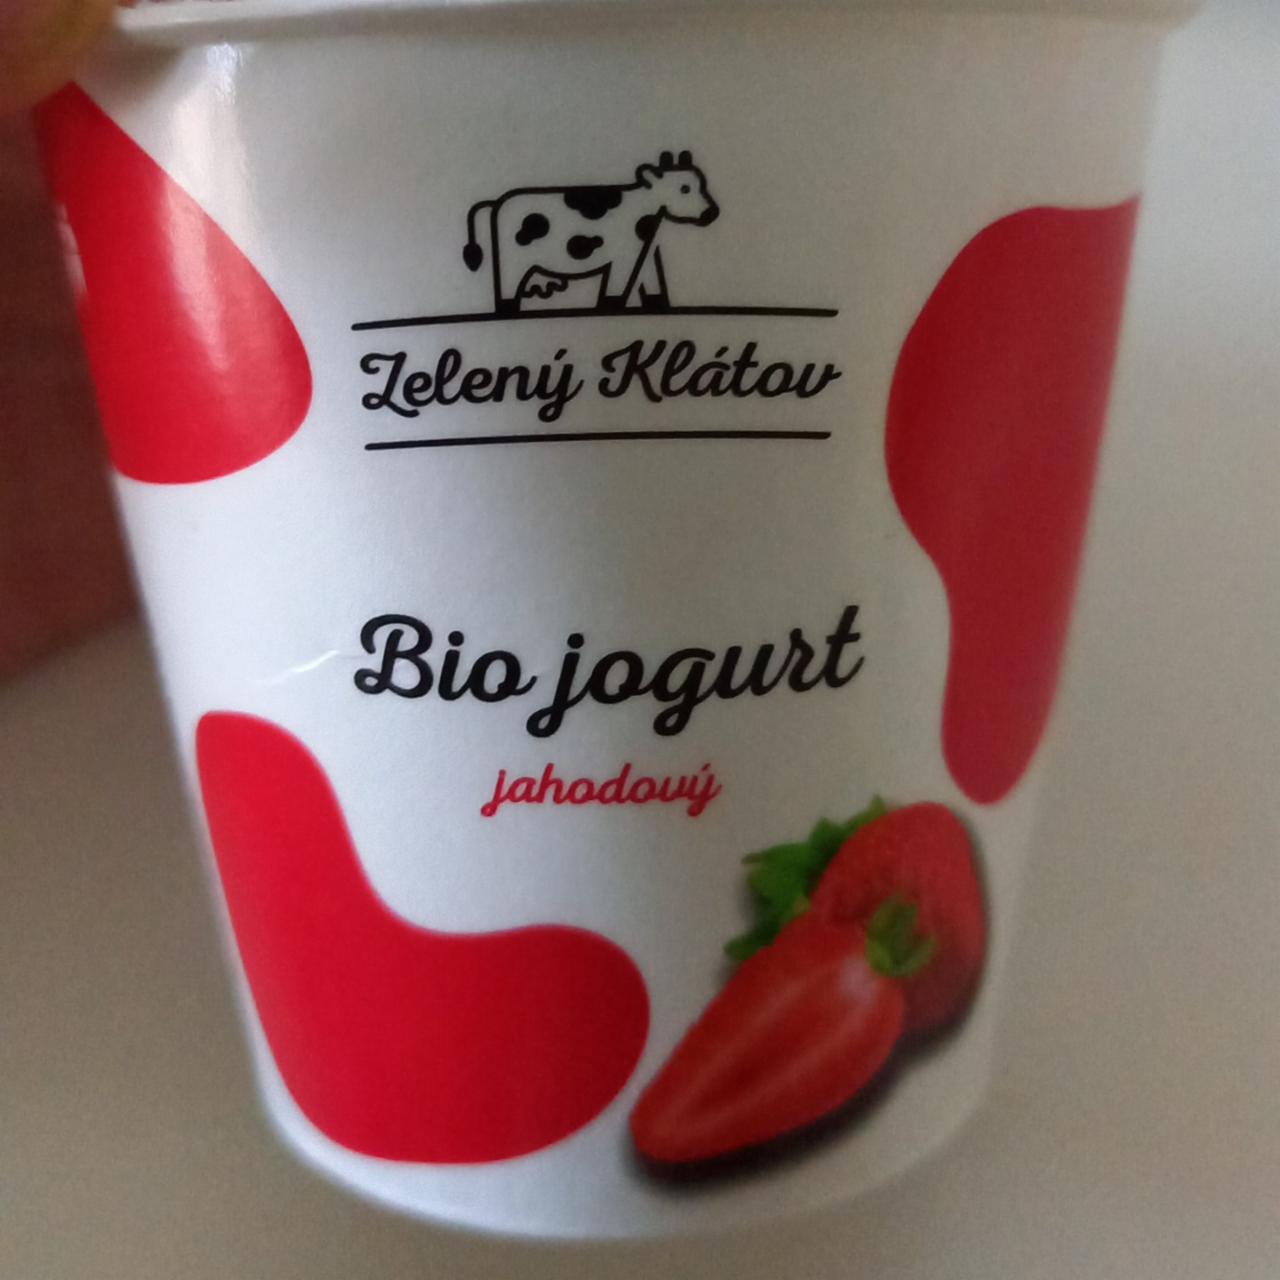 Fotografie - Zelený Klátov Bio jogurt jahodový